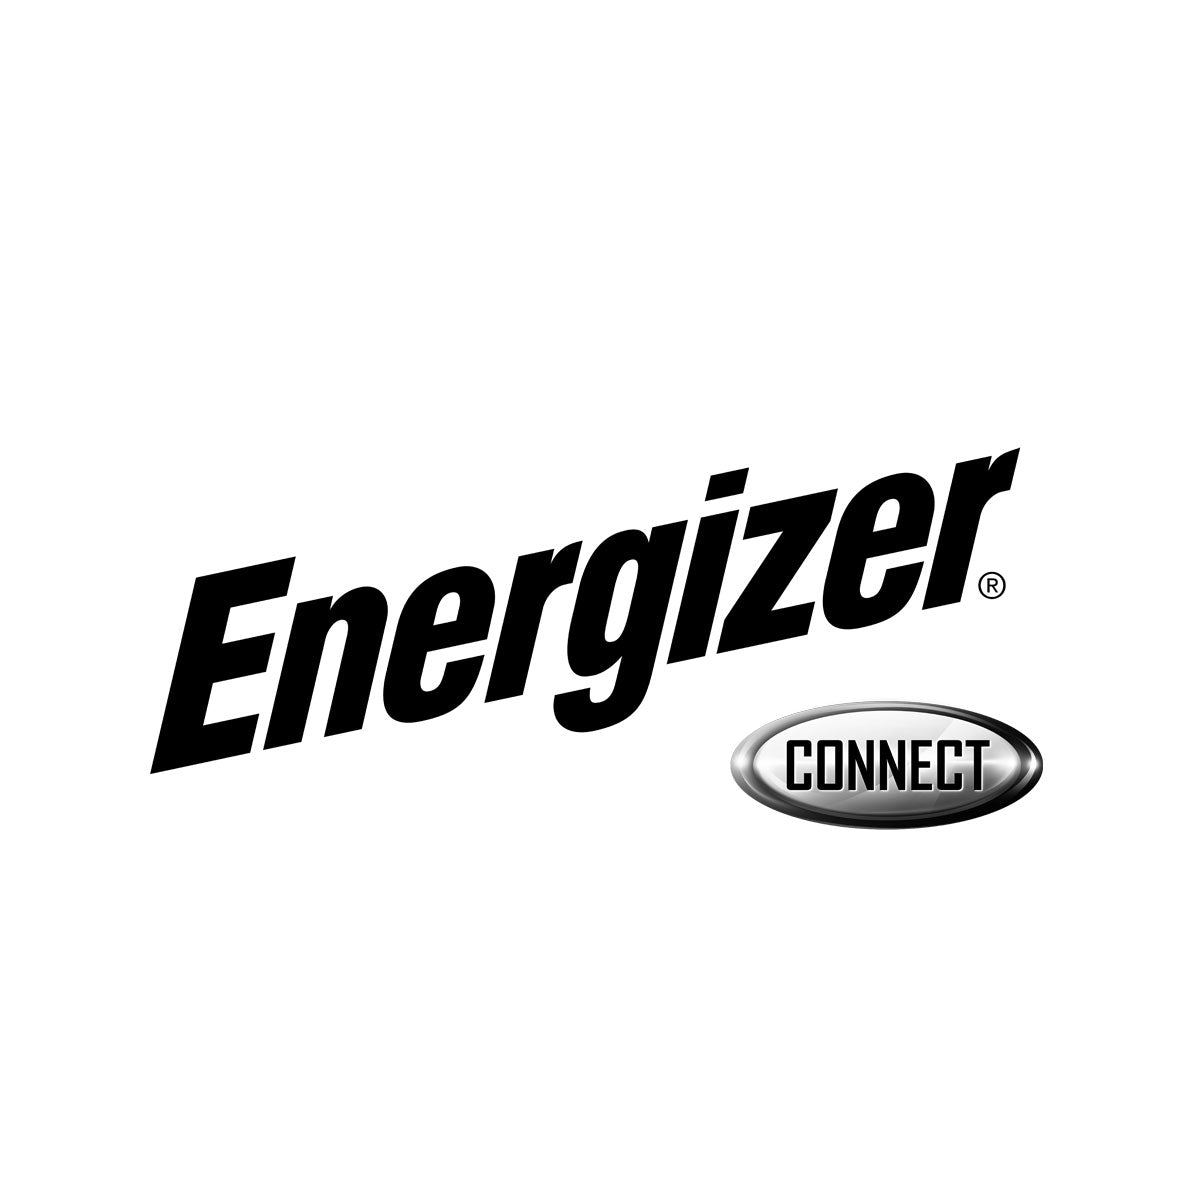 Energizer® Connect